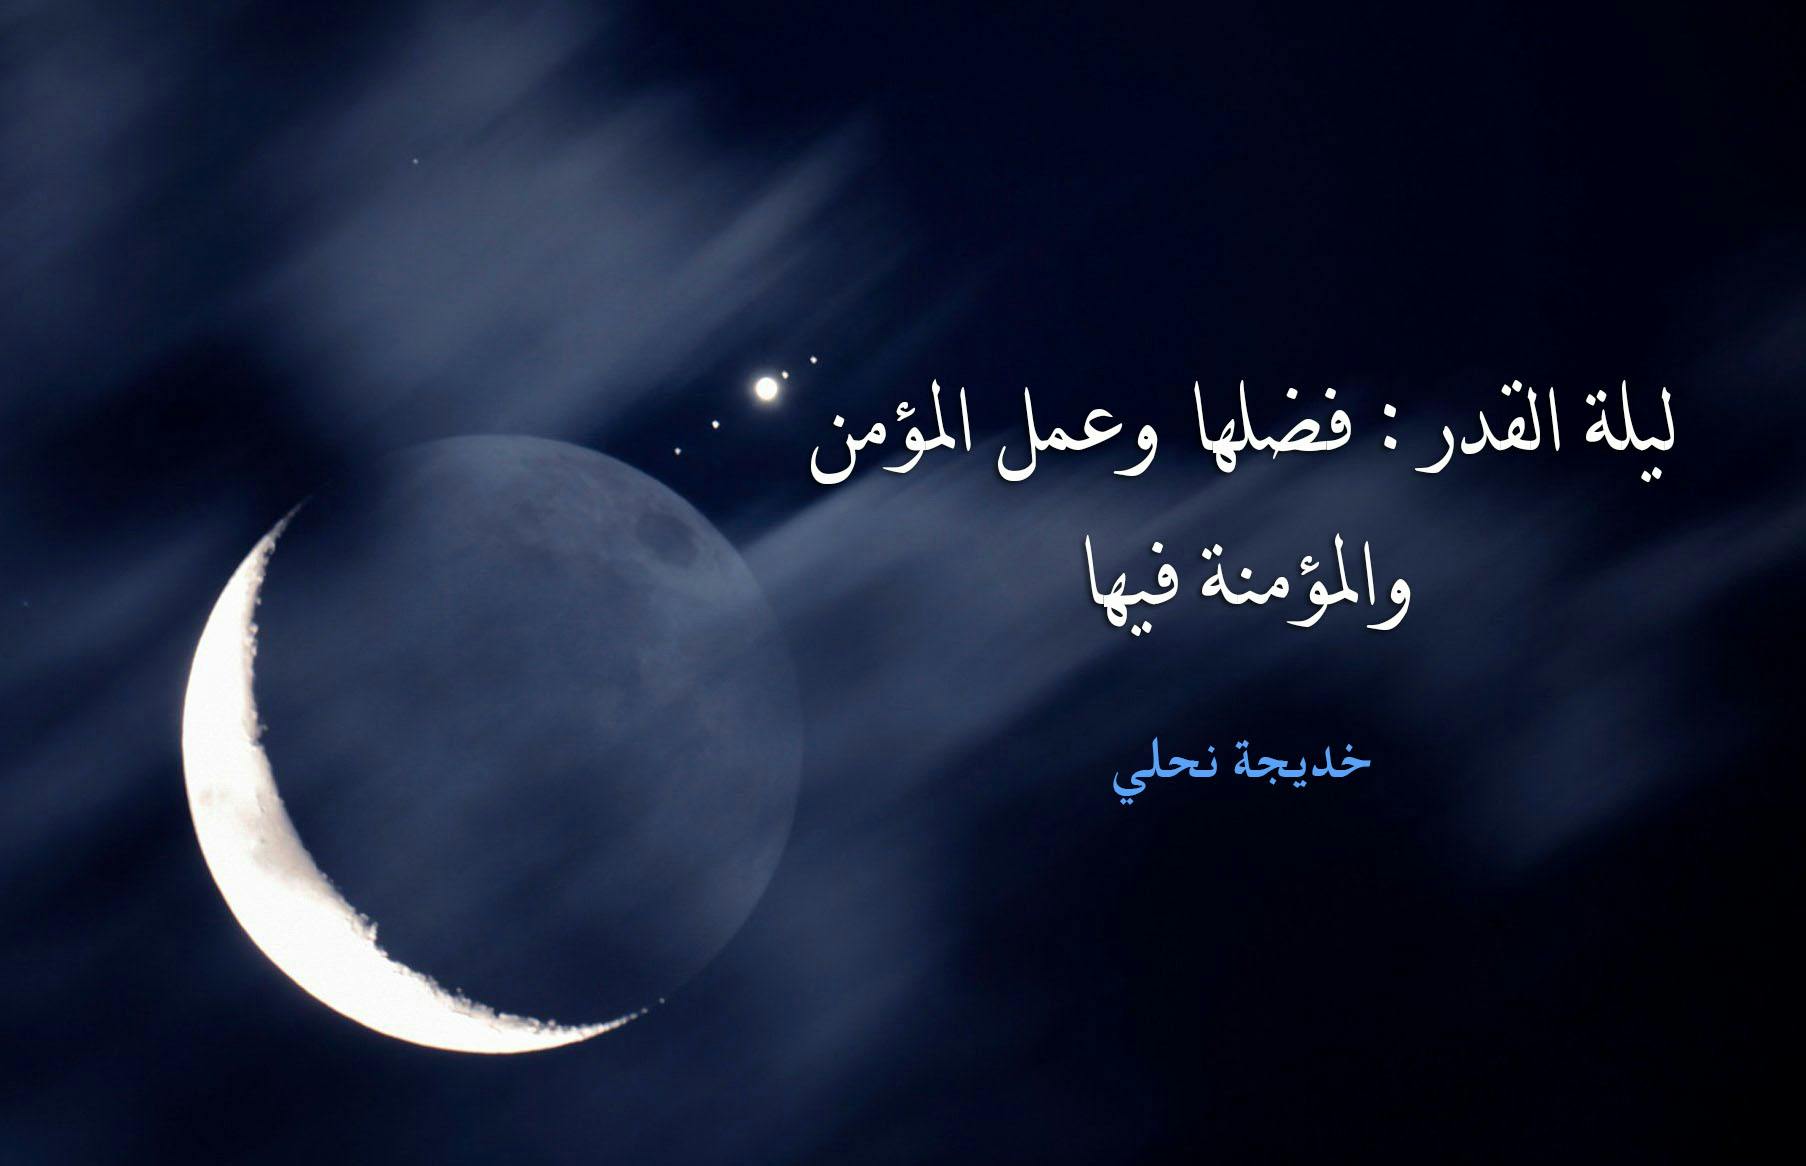 Cover Image for ليلة القدر: فضلها وعمل المؤمن والمؤمنة فيها